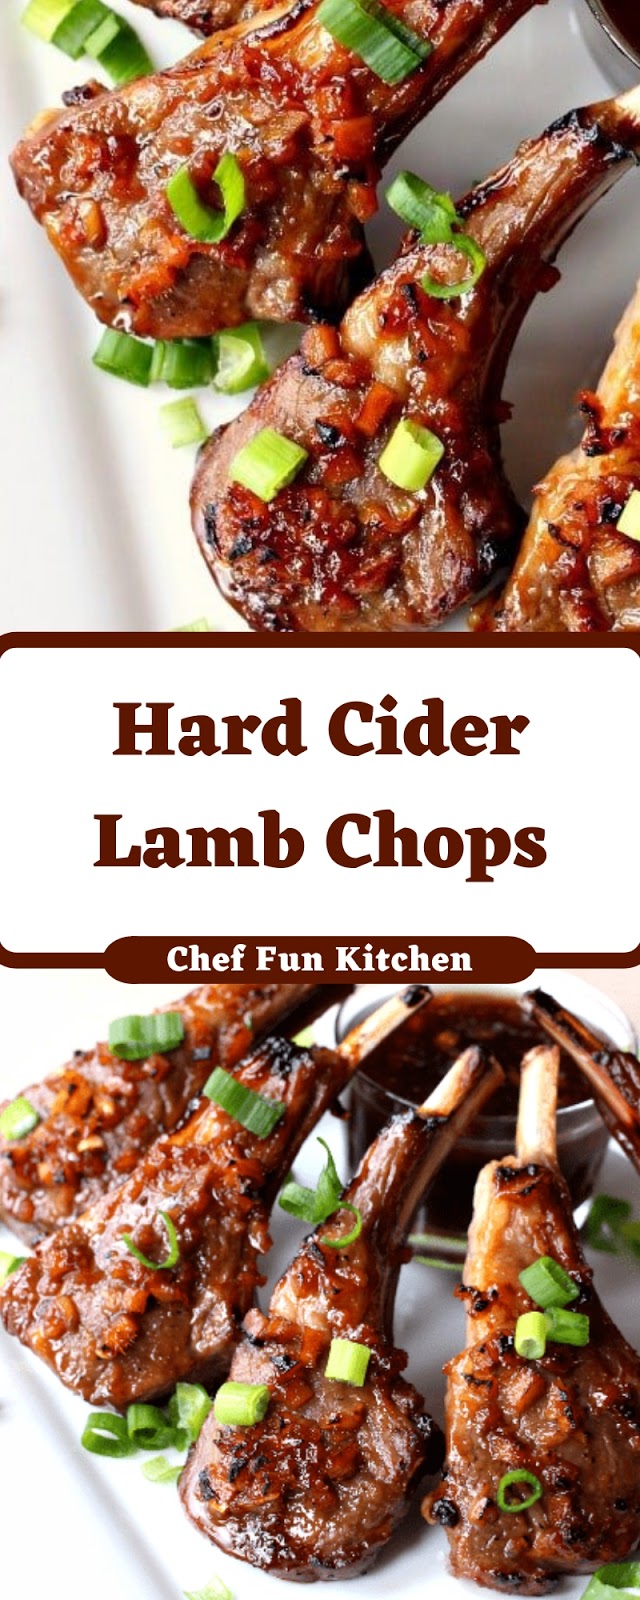 Hard Cider Lamb Chops